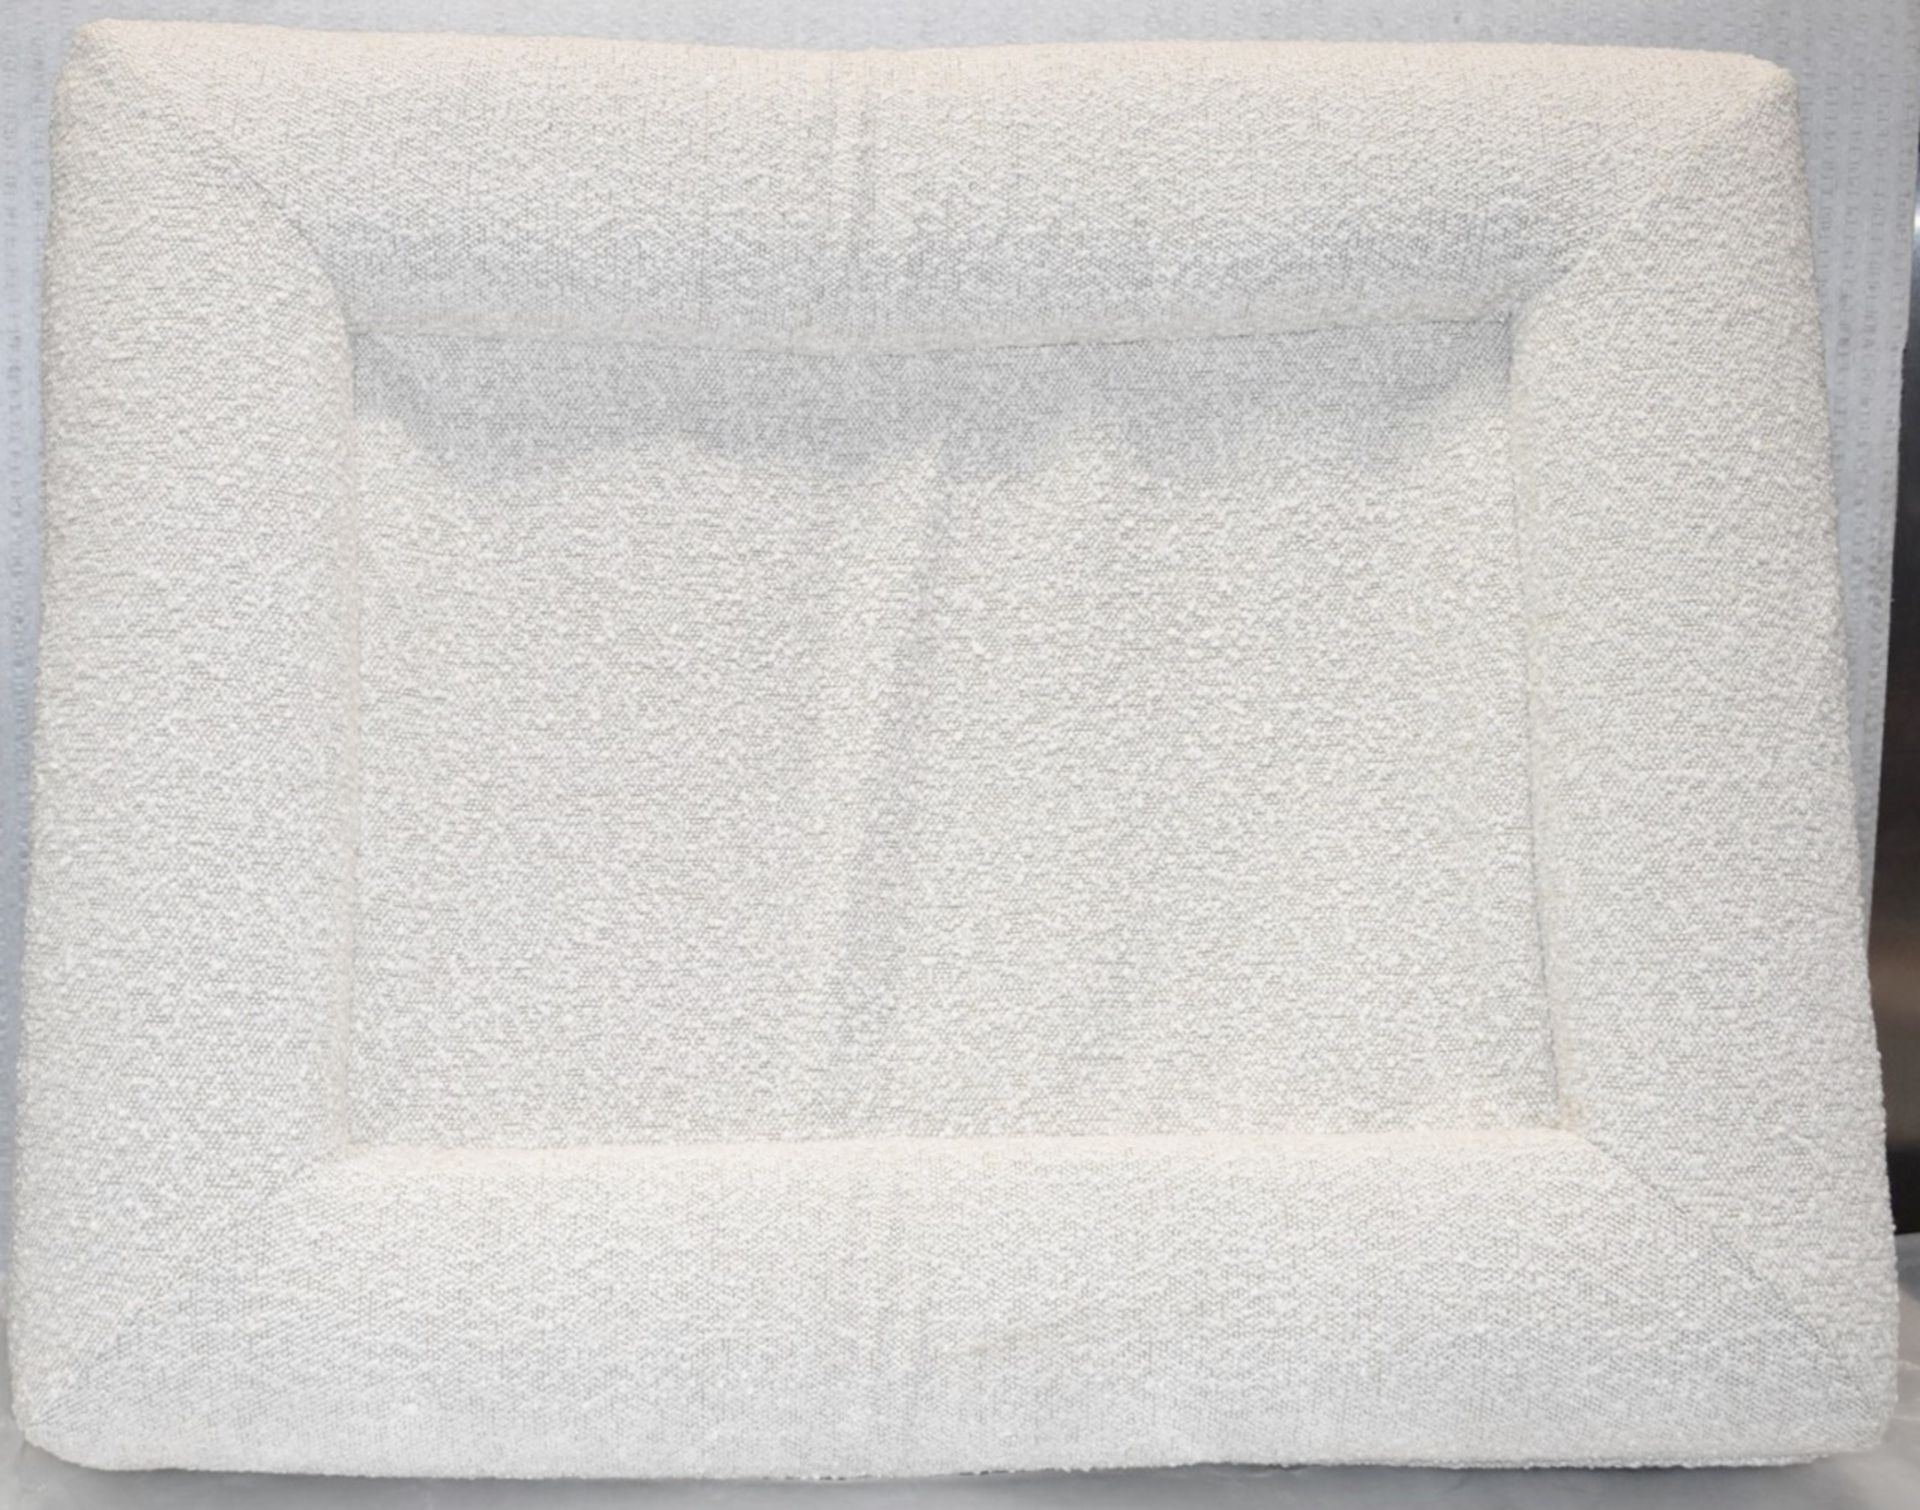 1 x TEDDY LONDON 'Bouclé' Luxury Medium Sized Dog Bed, in Cream - Original Price £169.00 - Image 5 of 8